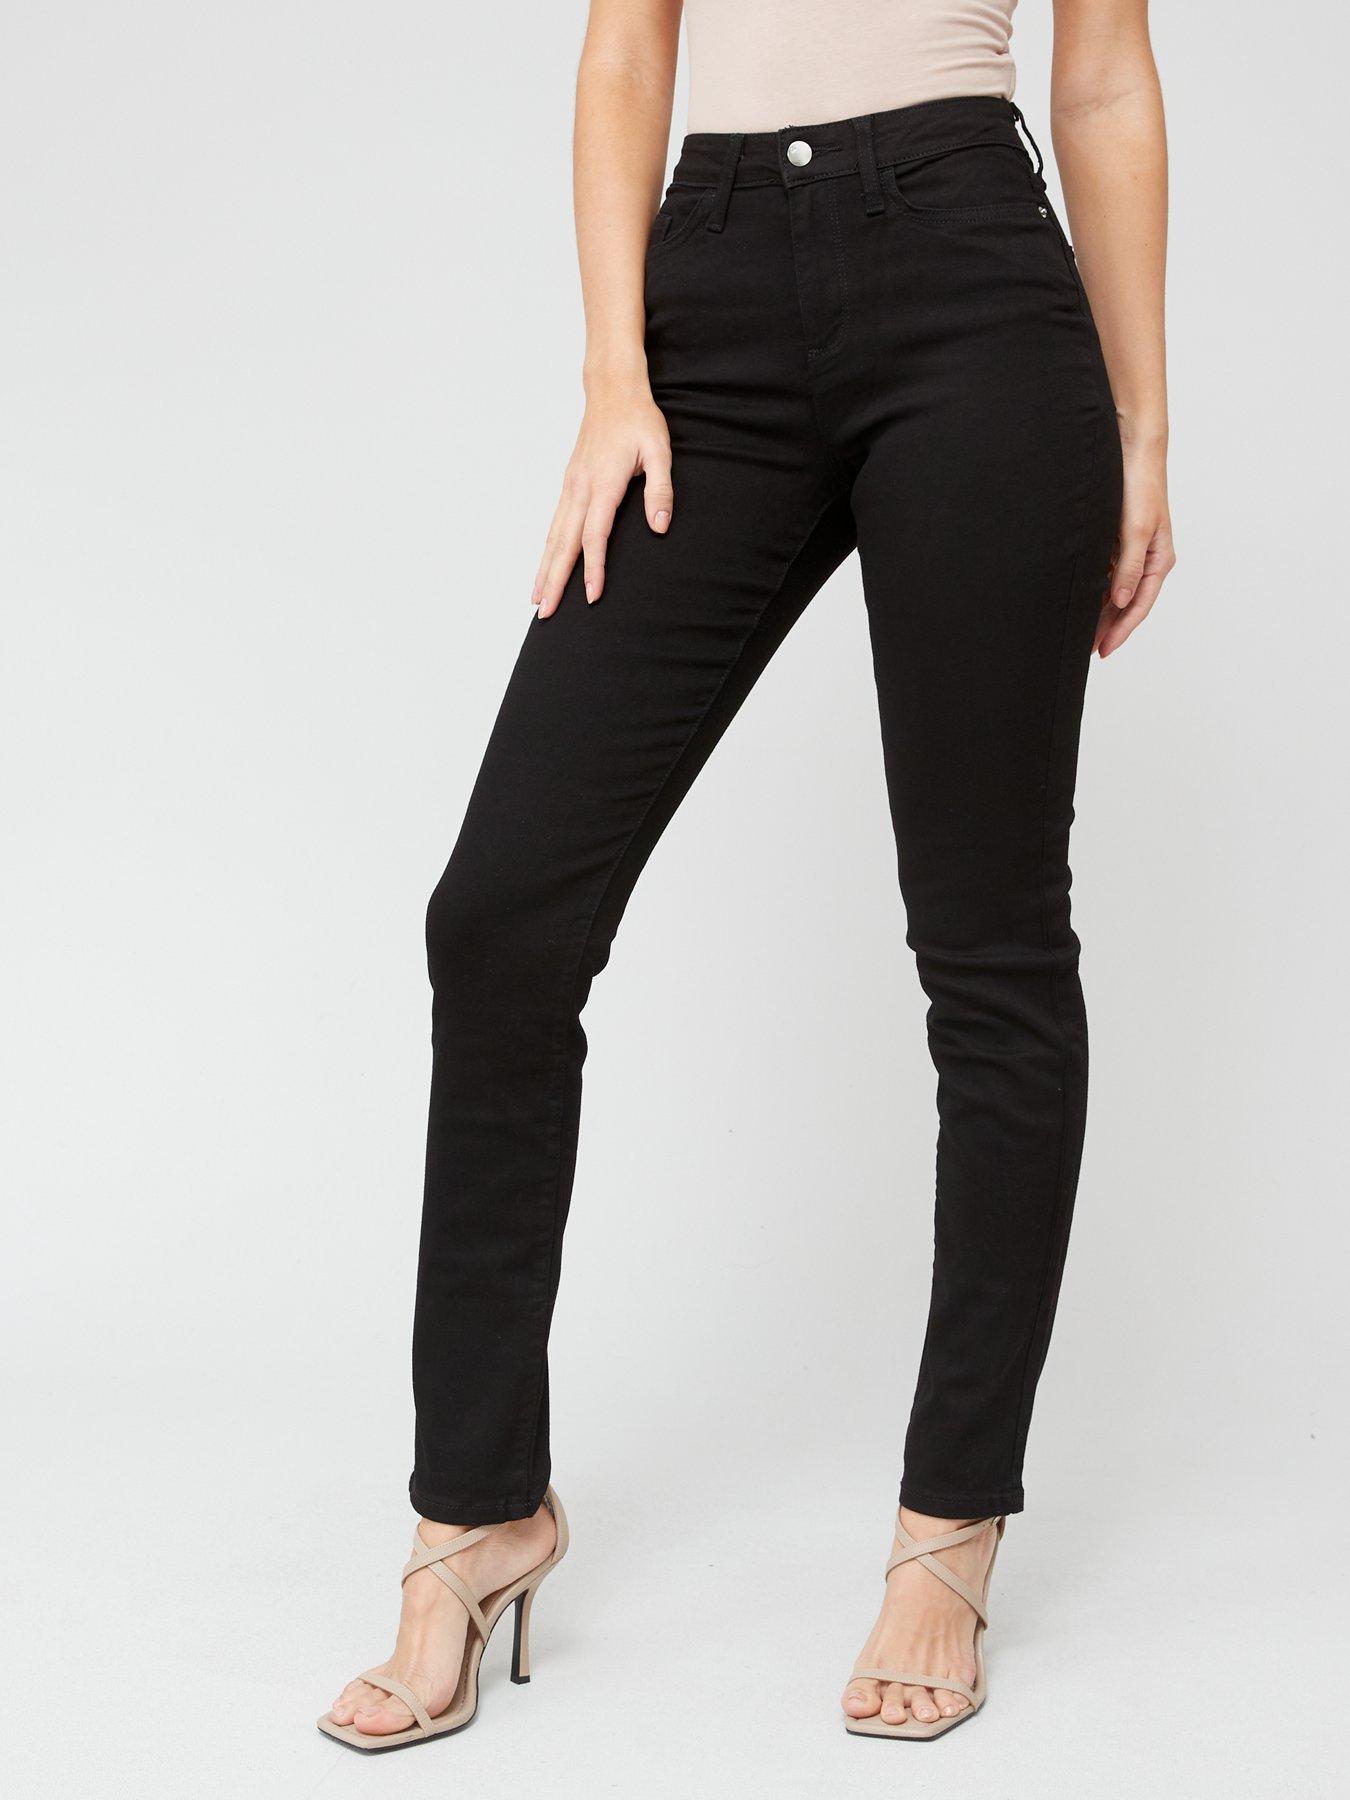 black slim leg jeans womens